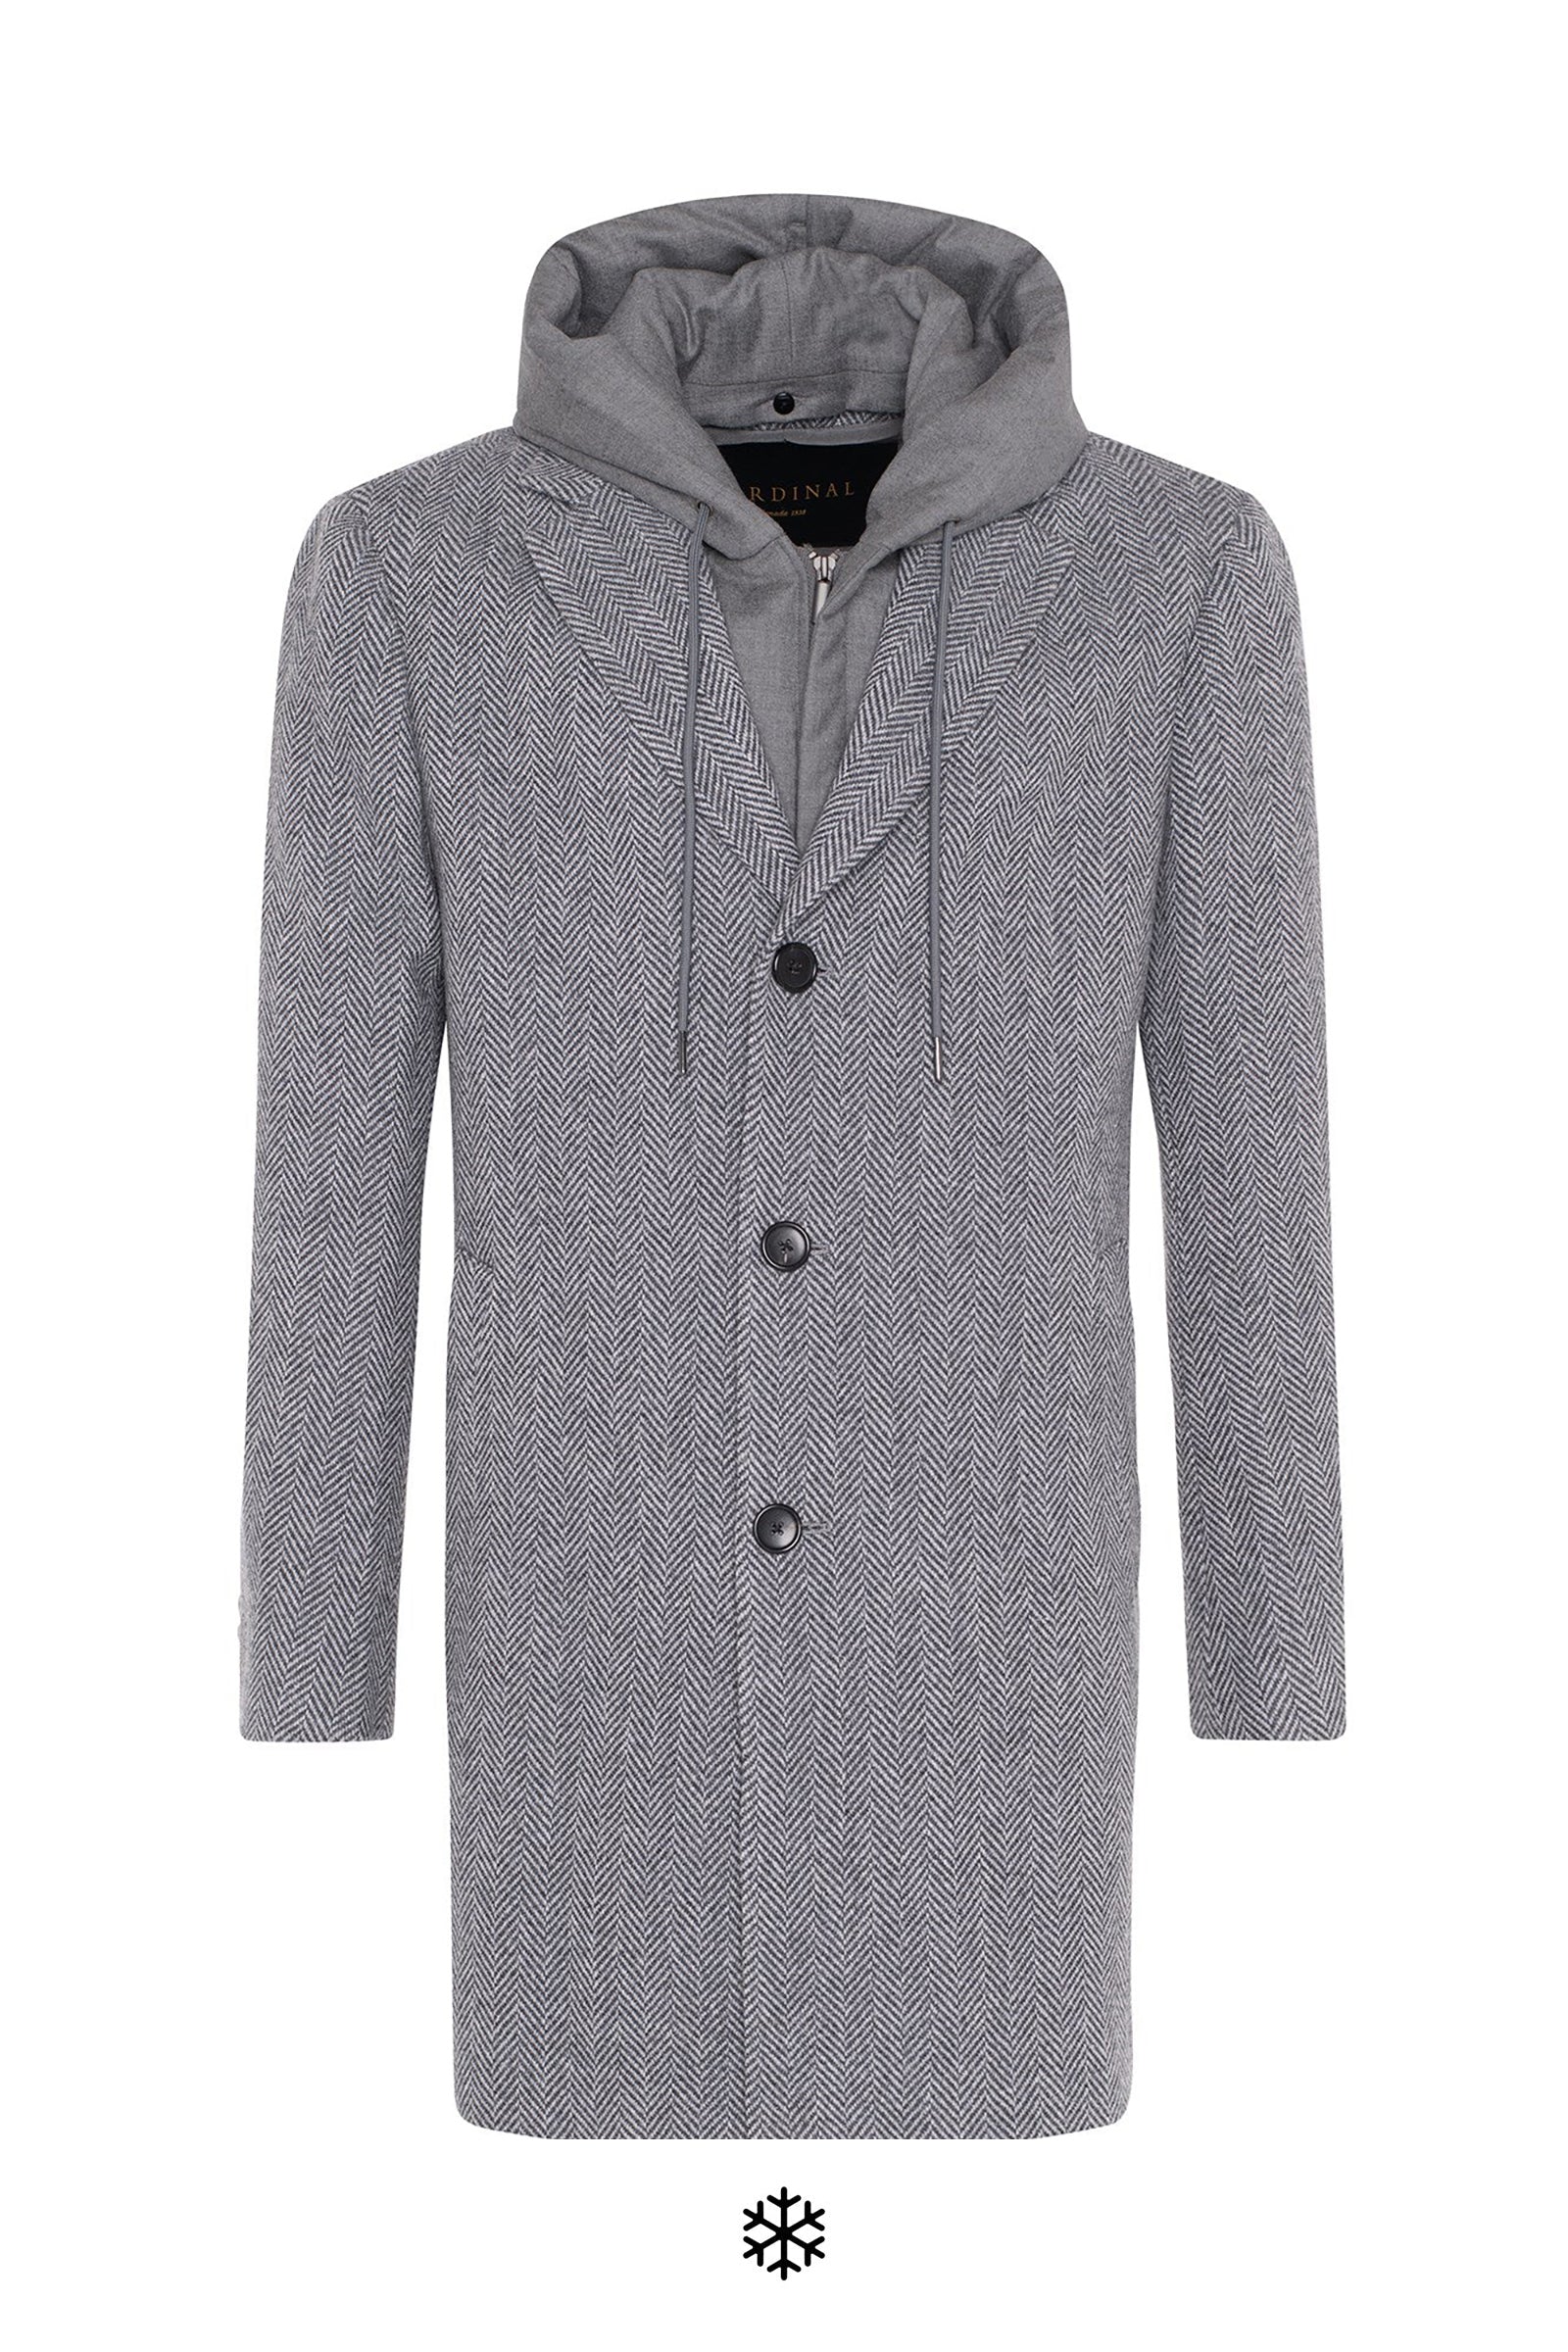 Tate - grey herringbone wool, silk and cashmere topcoat 36 inch length